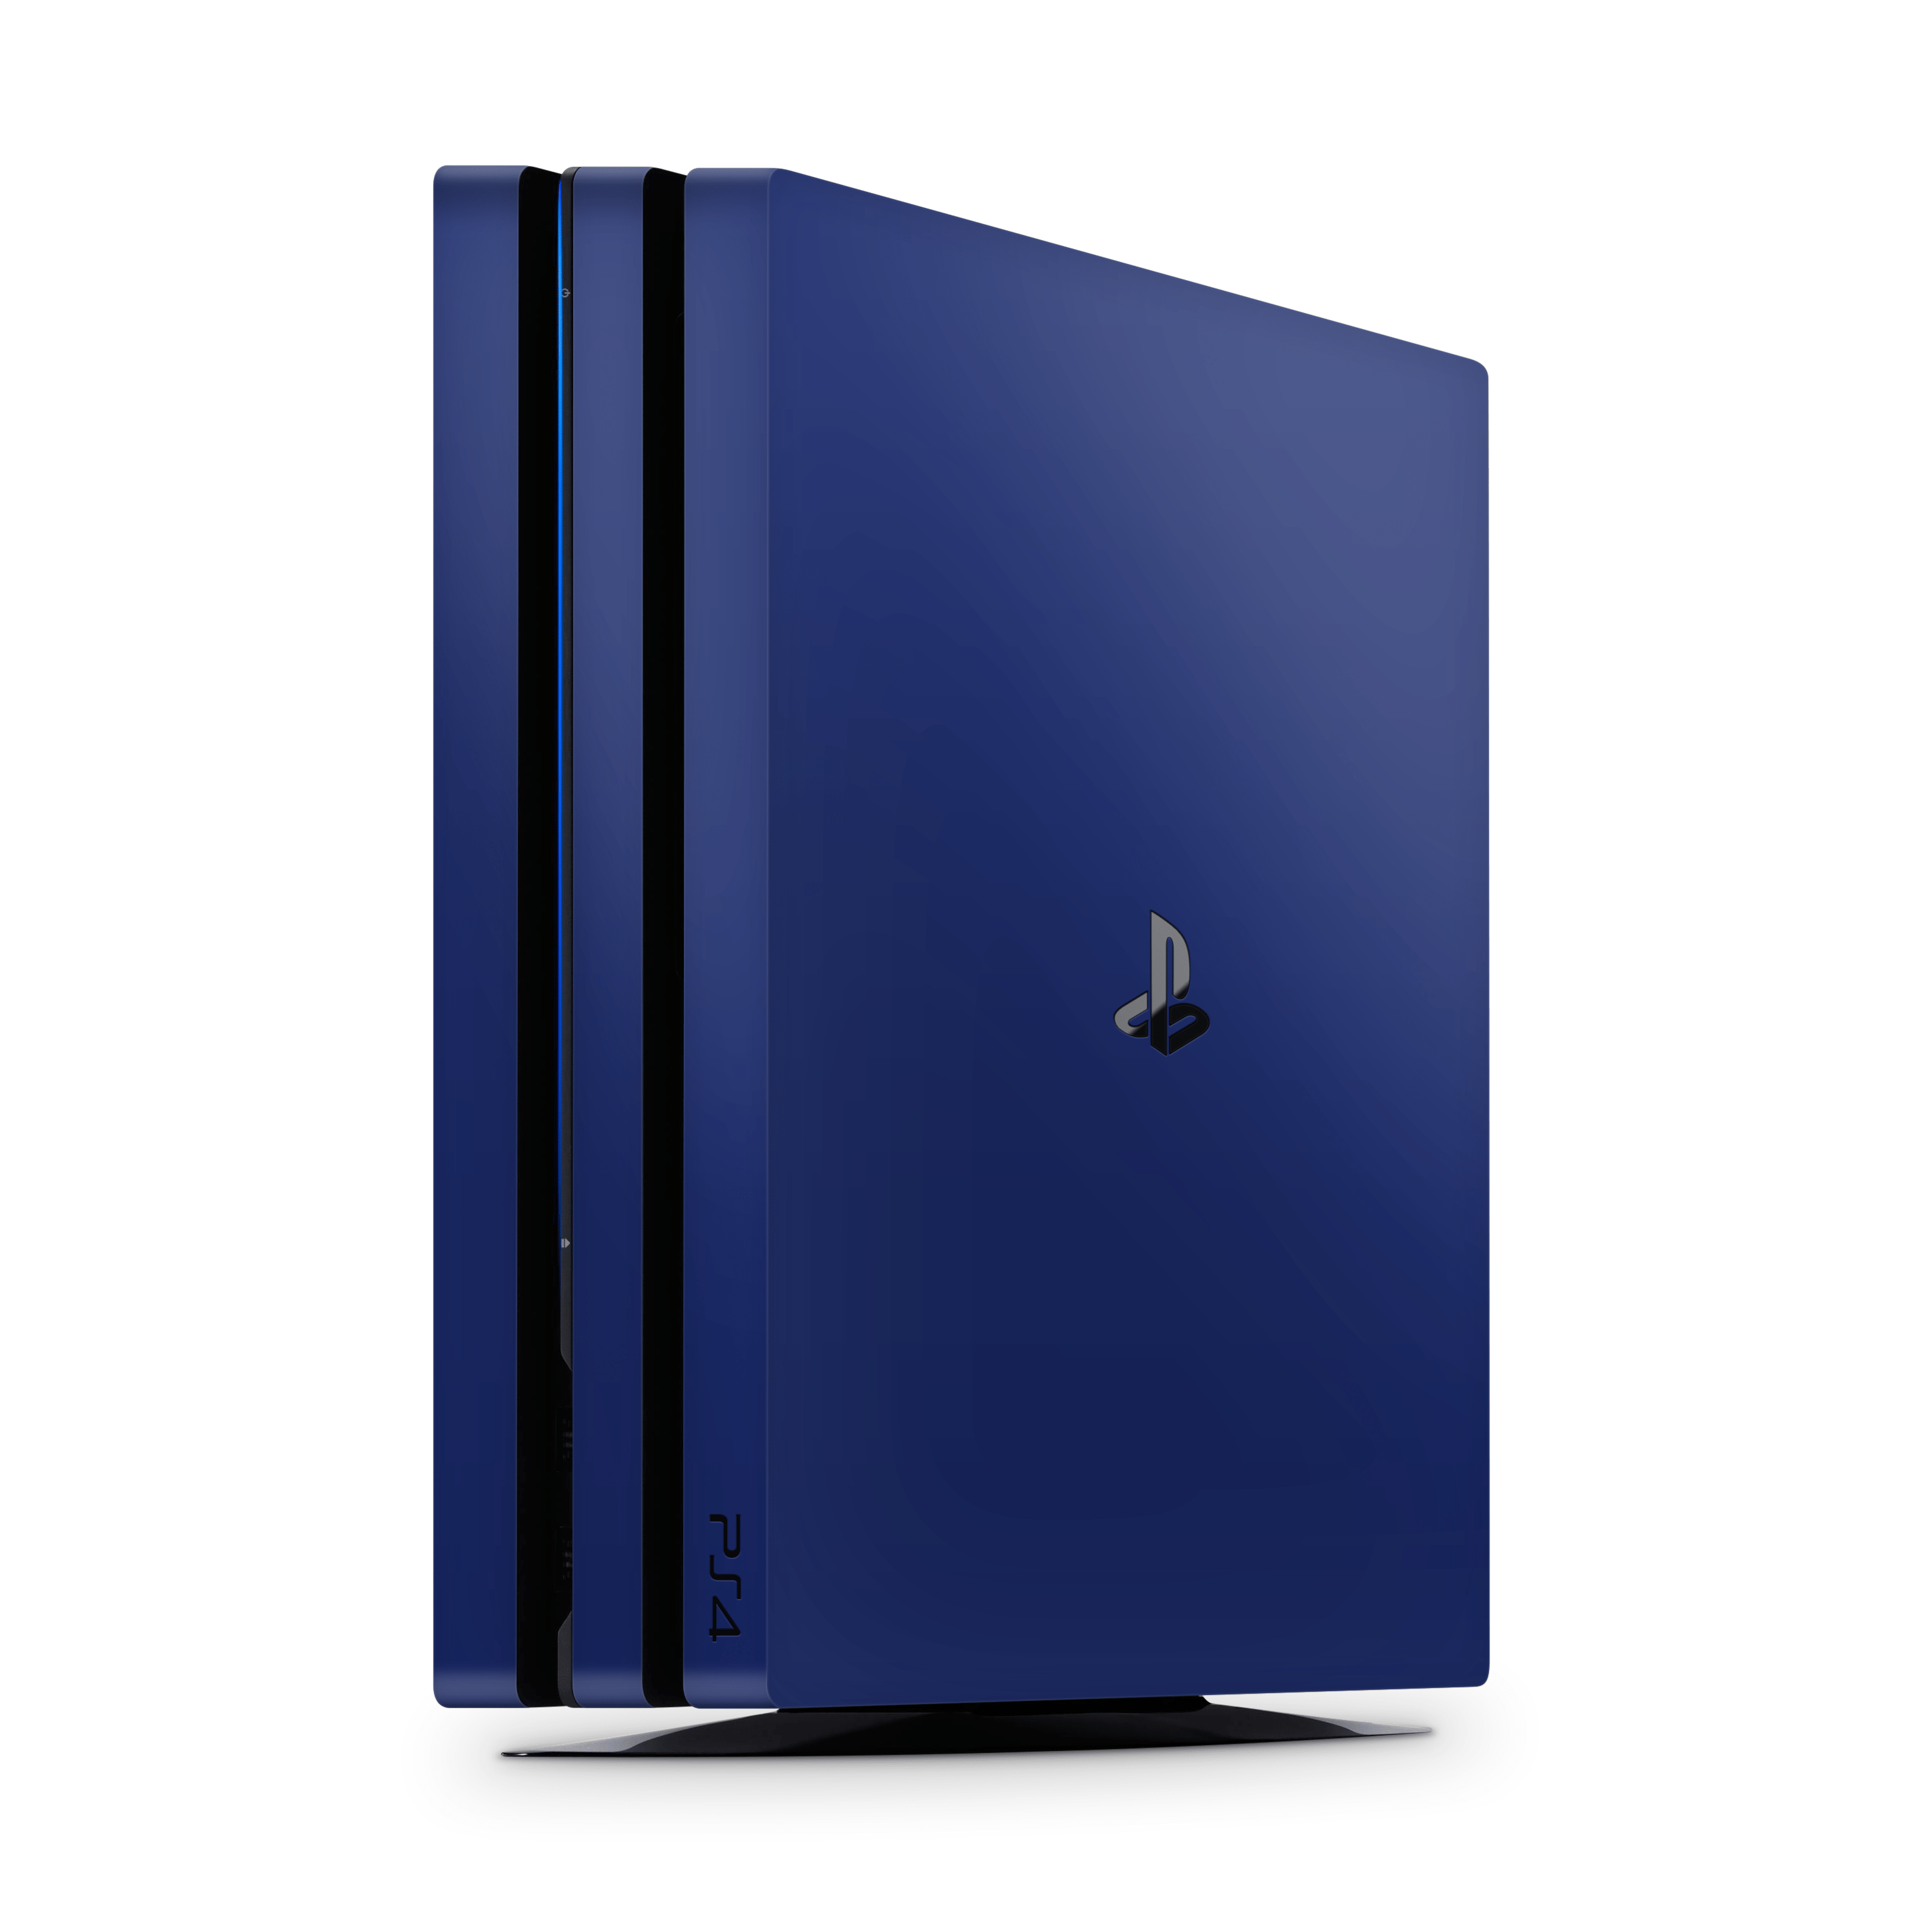 Royal Blue PS4 | PS4 Pro | PS4 Slim Skins